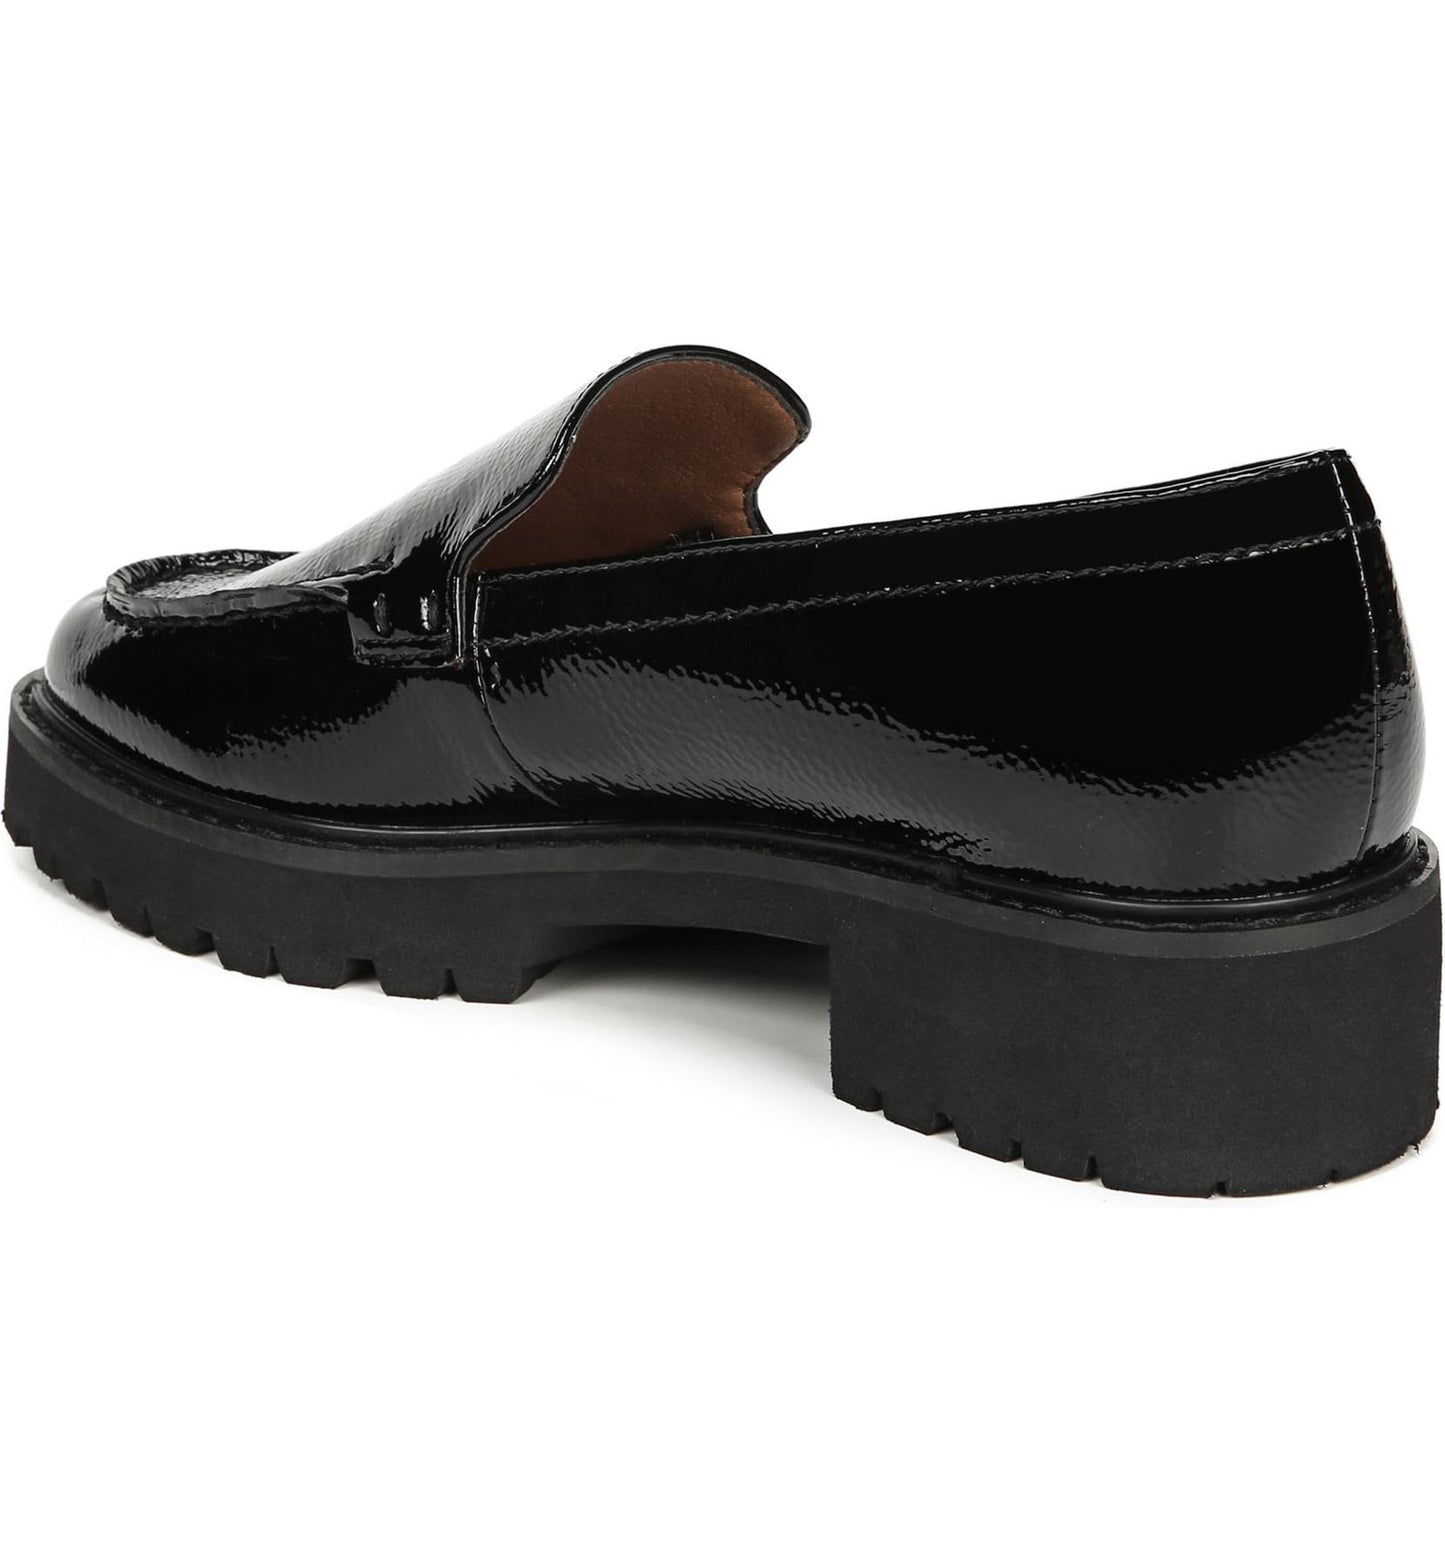 Delana Black Patent Leather Franco Sarto Loafers